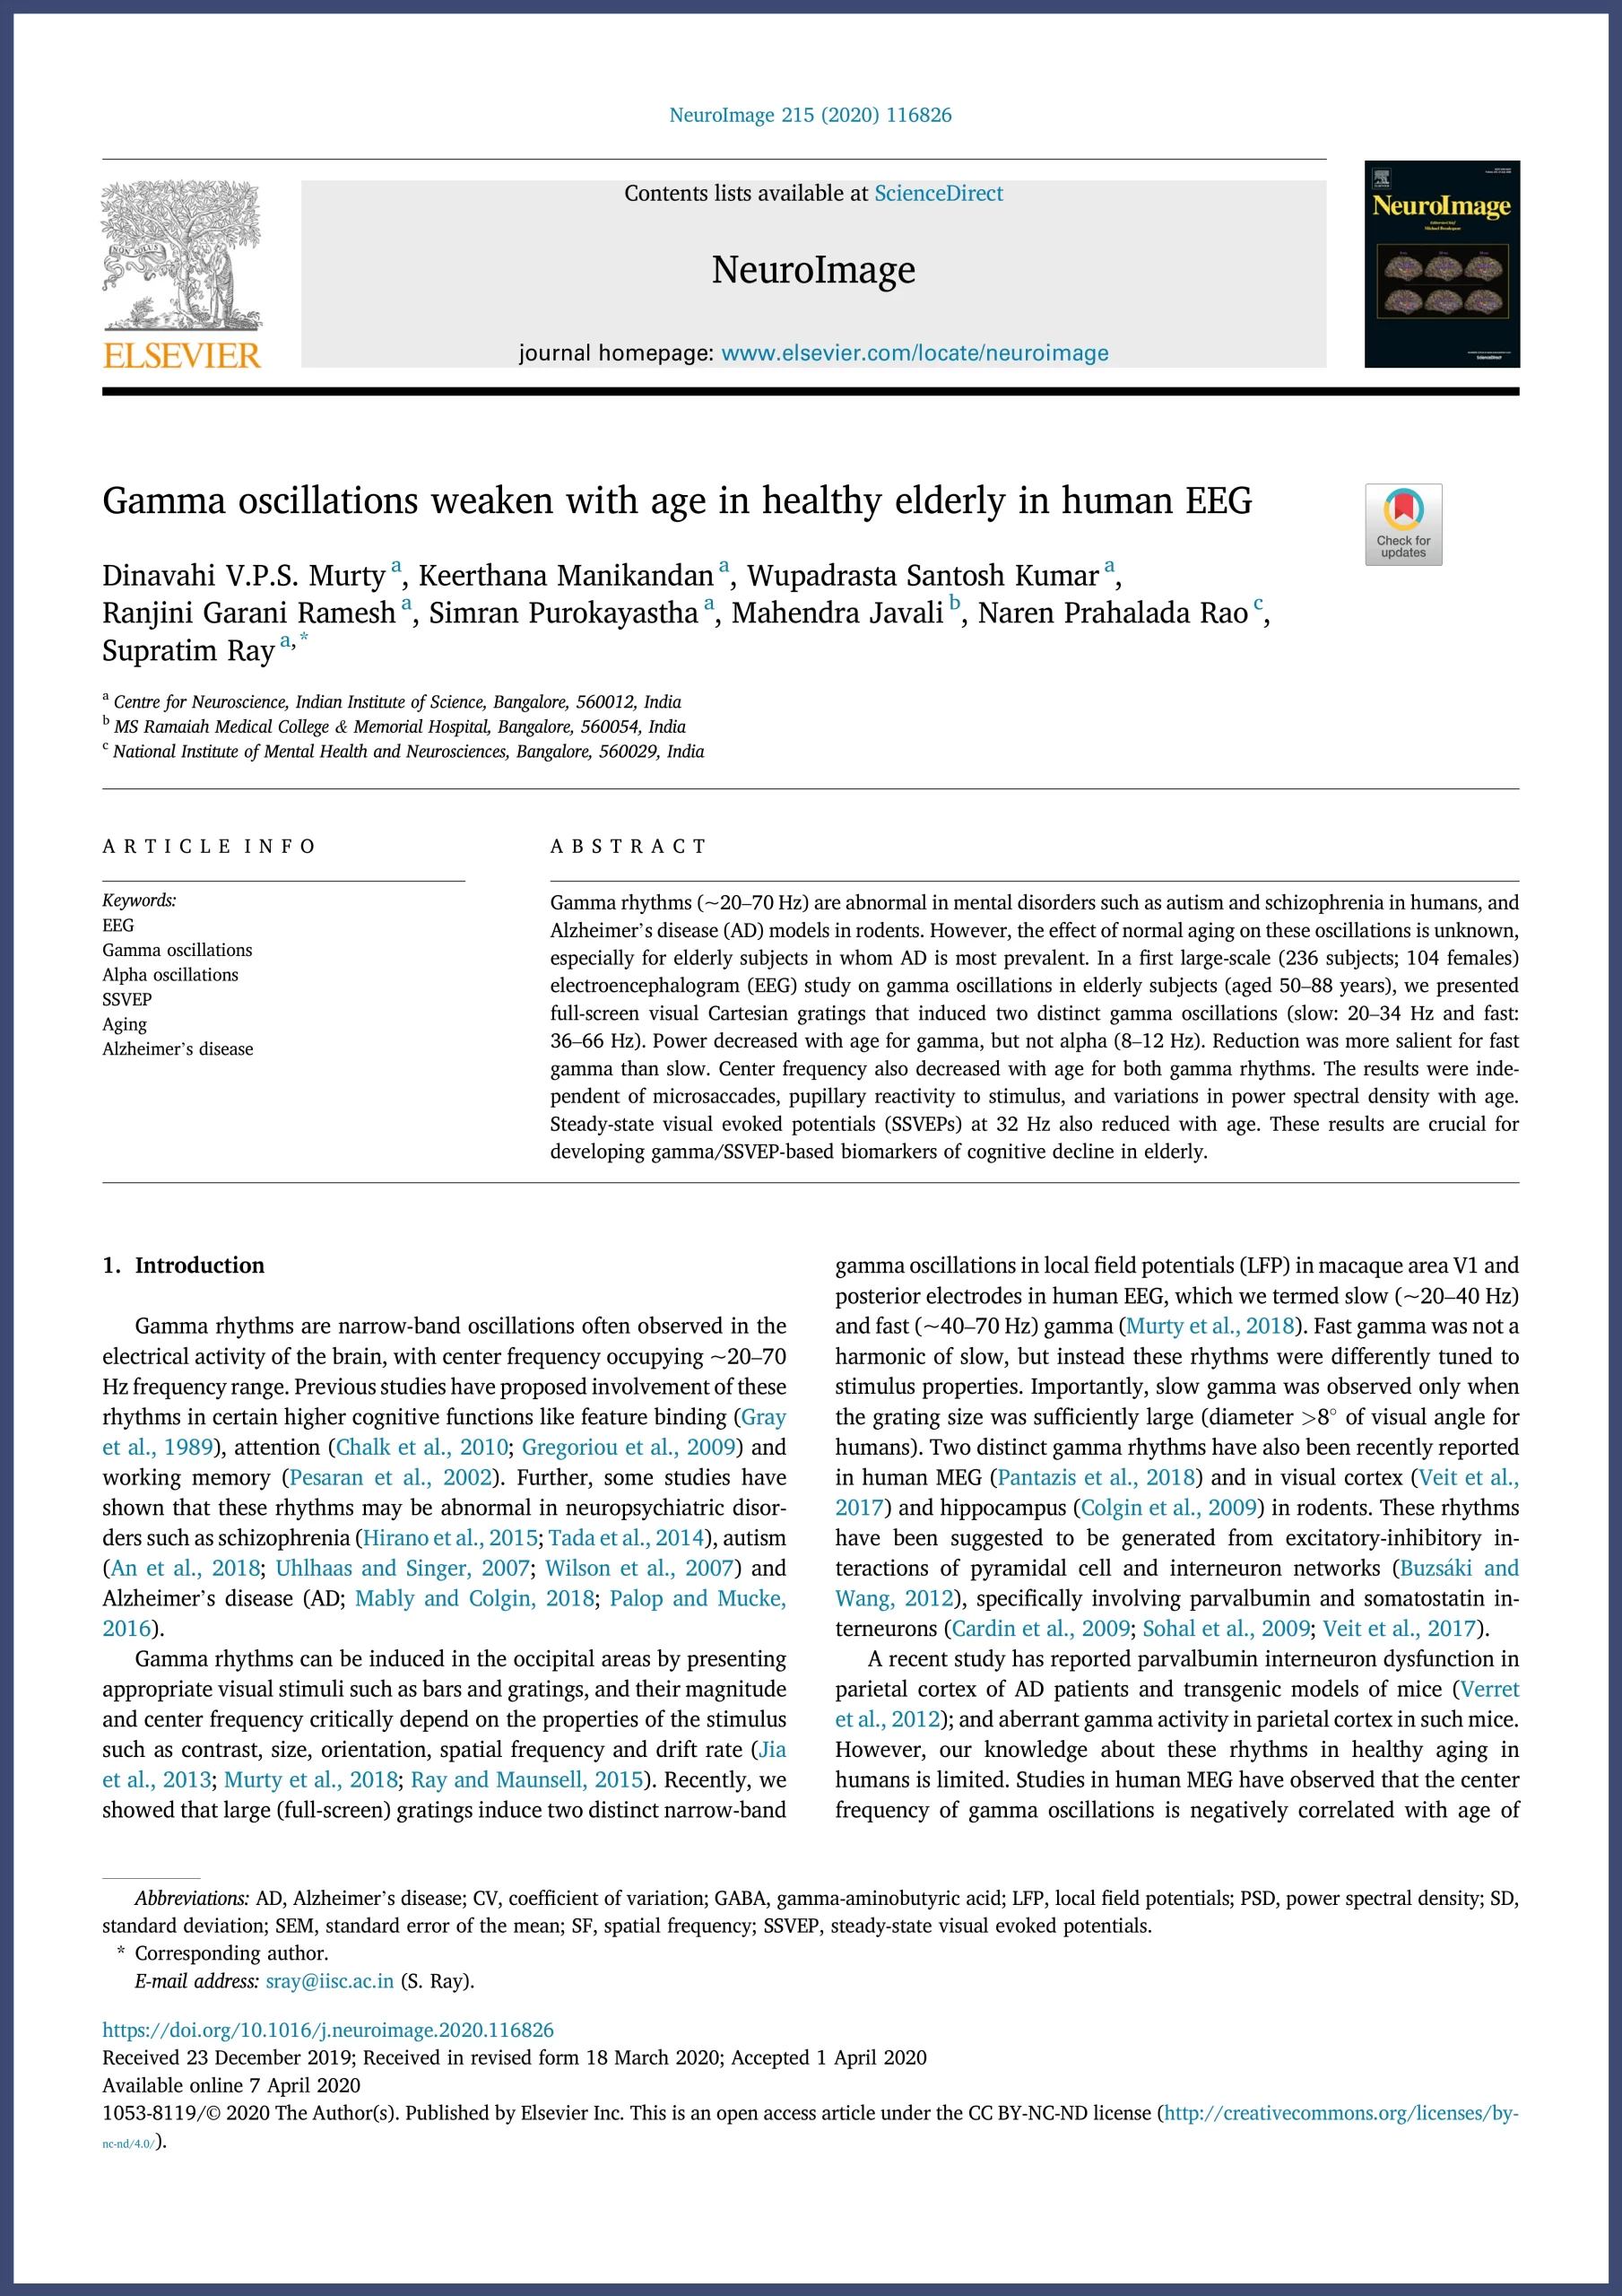 Gamma oscillations weaken with age in healthy elderly in human EEG publication by Murty, 2020